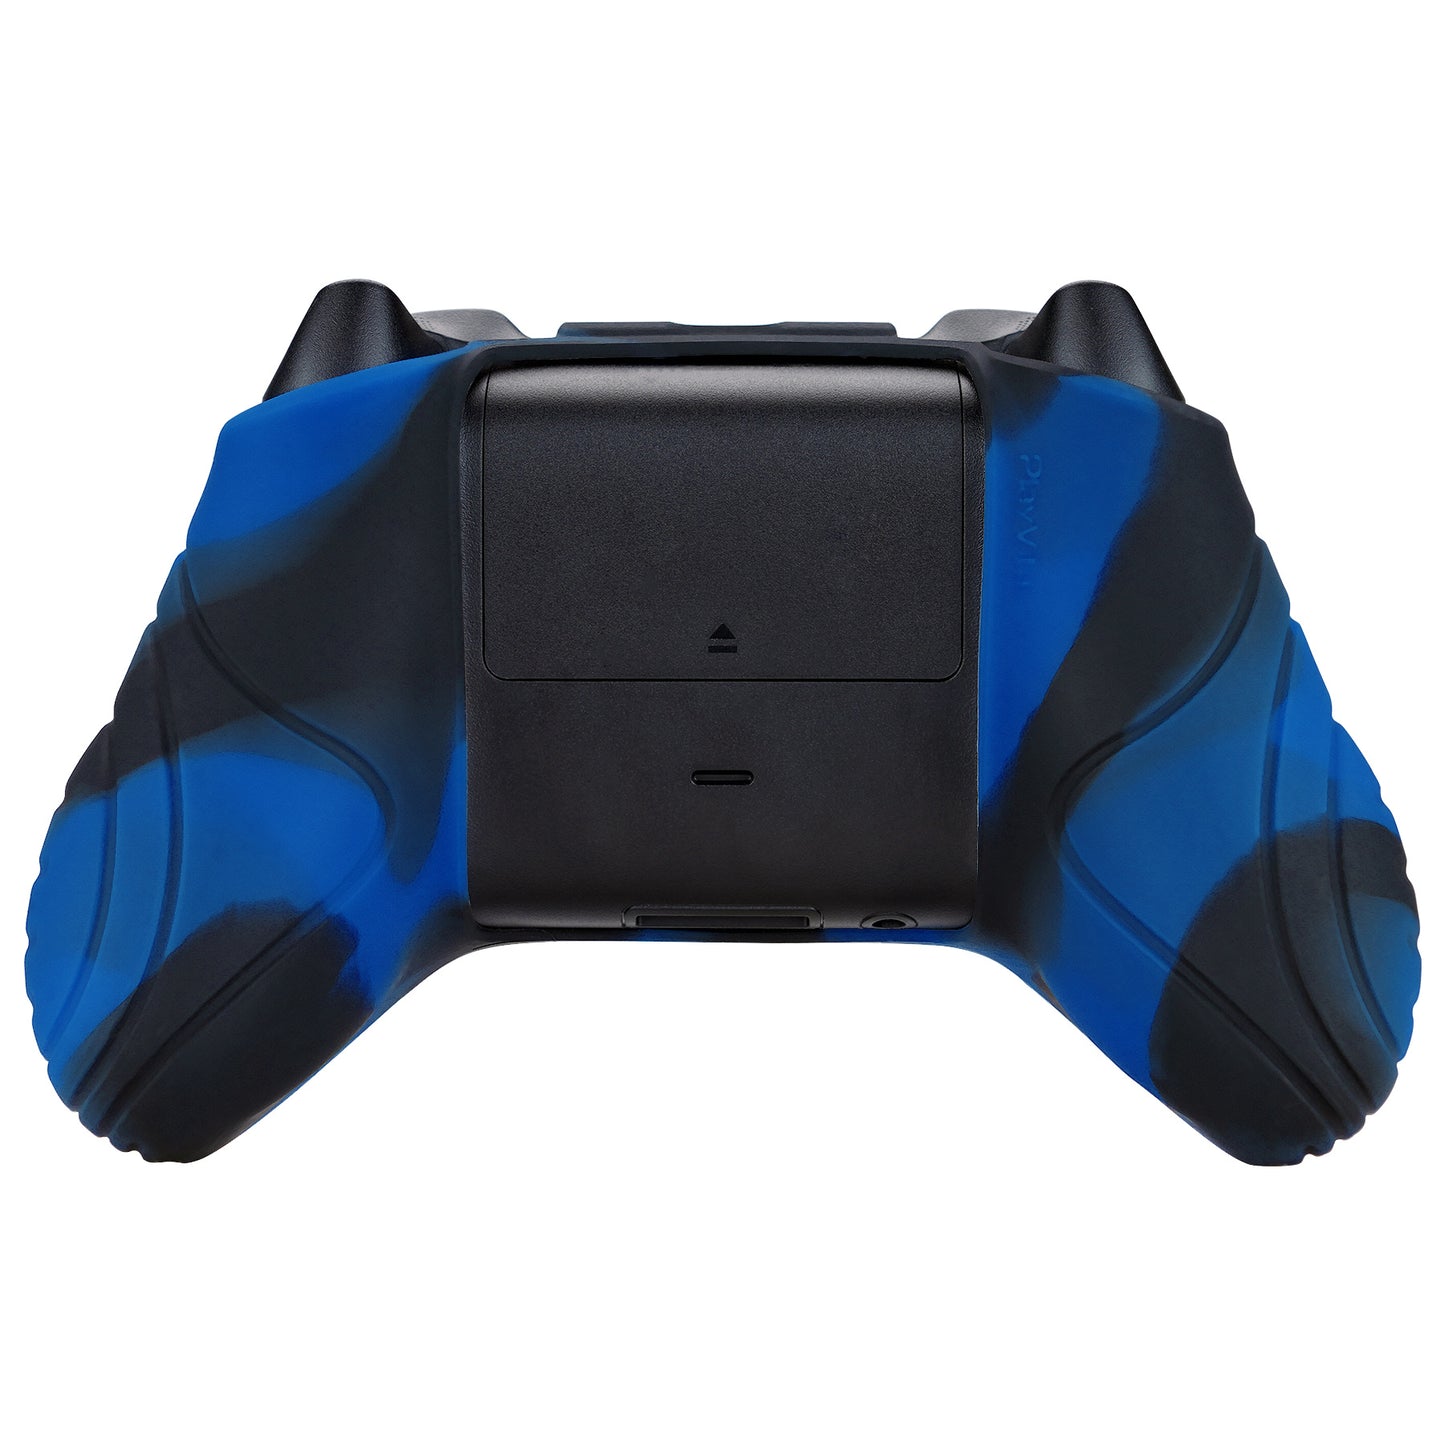 PlayVital Samurai Edition Anti-slip Controller Grip Silicone Skin for Xbox Core Controller, Ergonomic Protective Case Cover for Xbox Series S/X Controller w/ Thumb Grips - Black & Blue - WAX3022 PlayVital